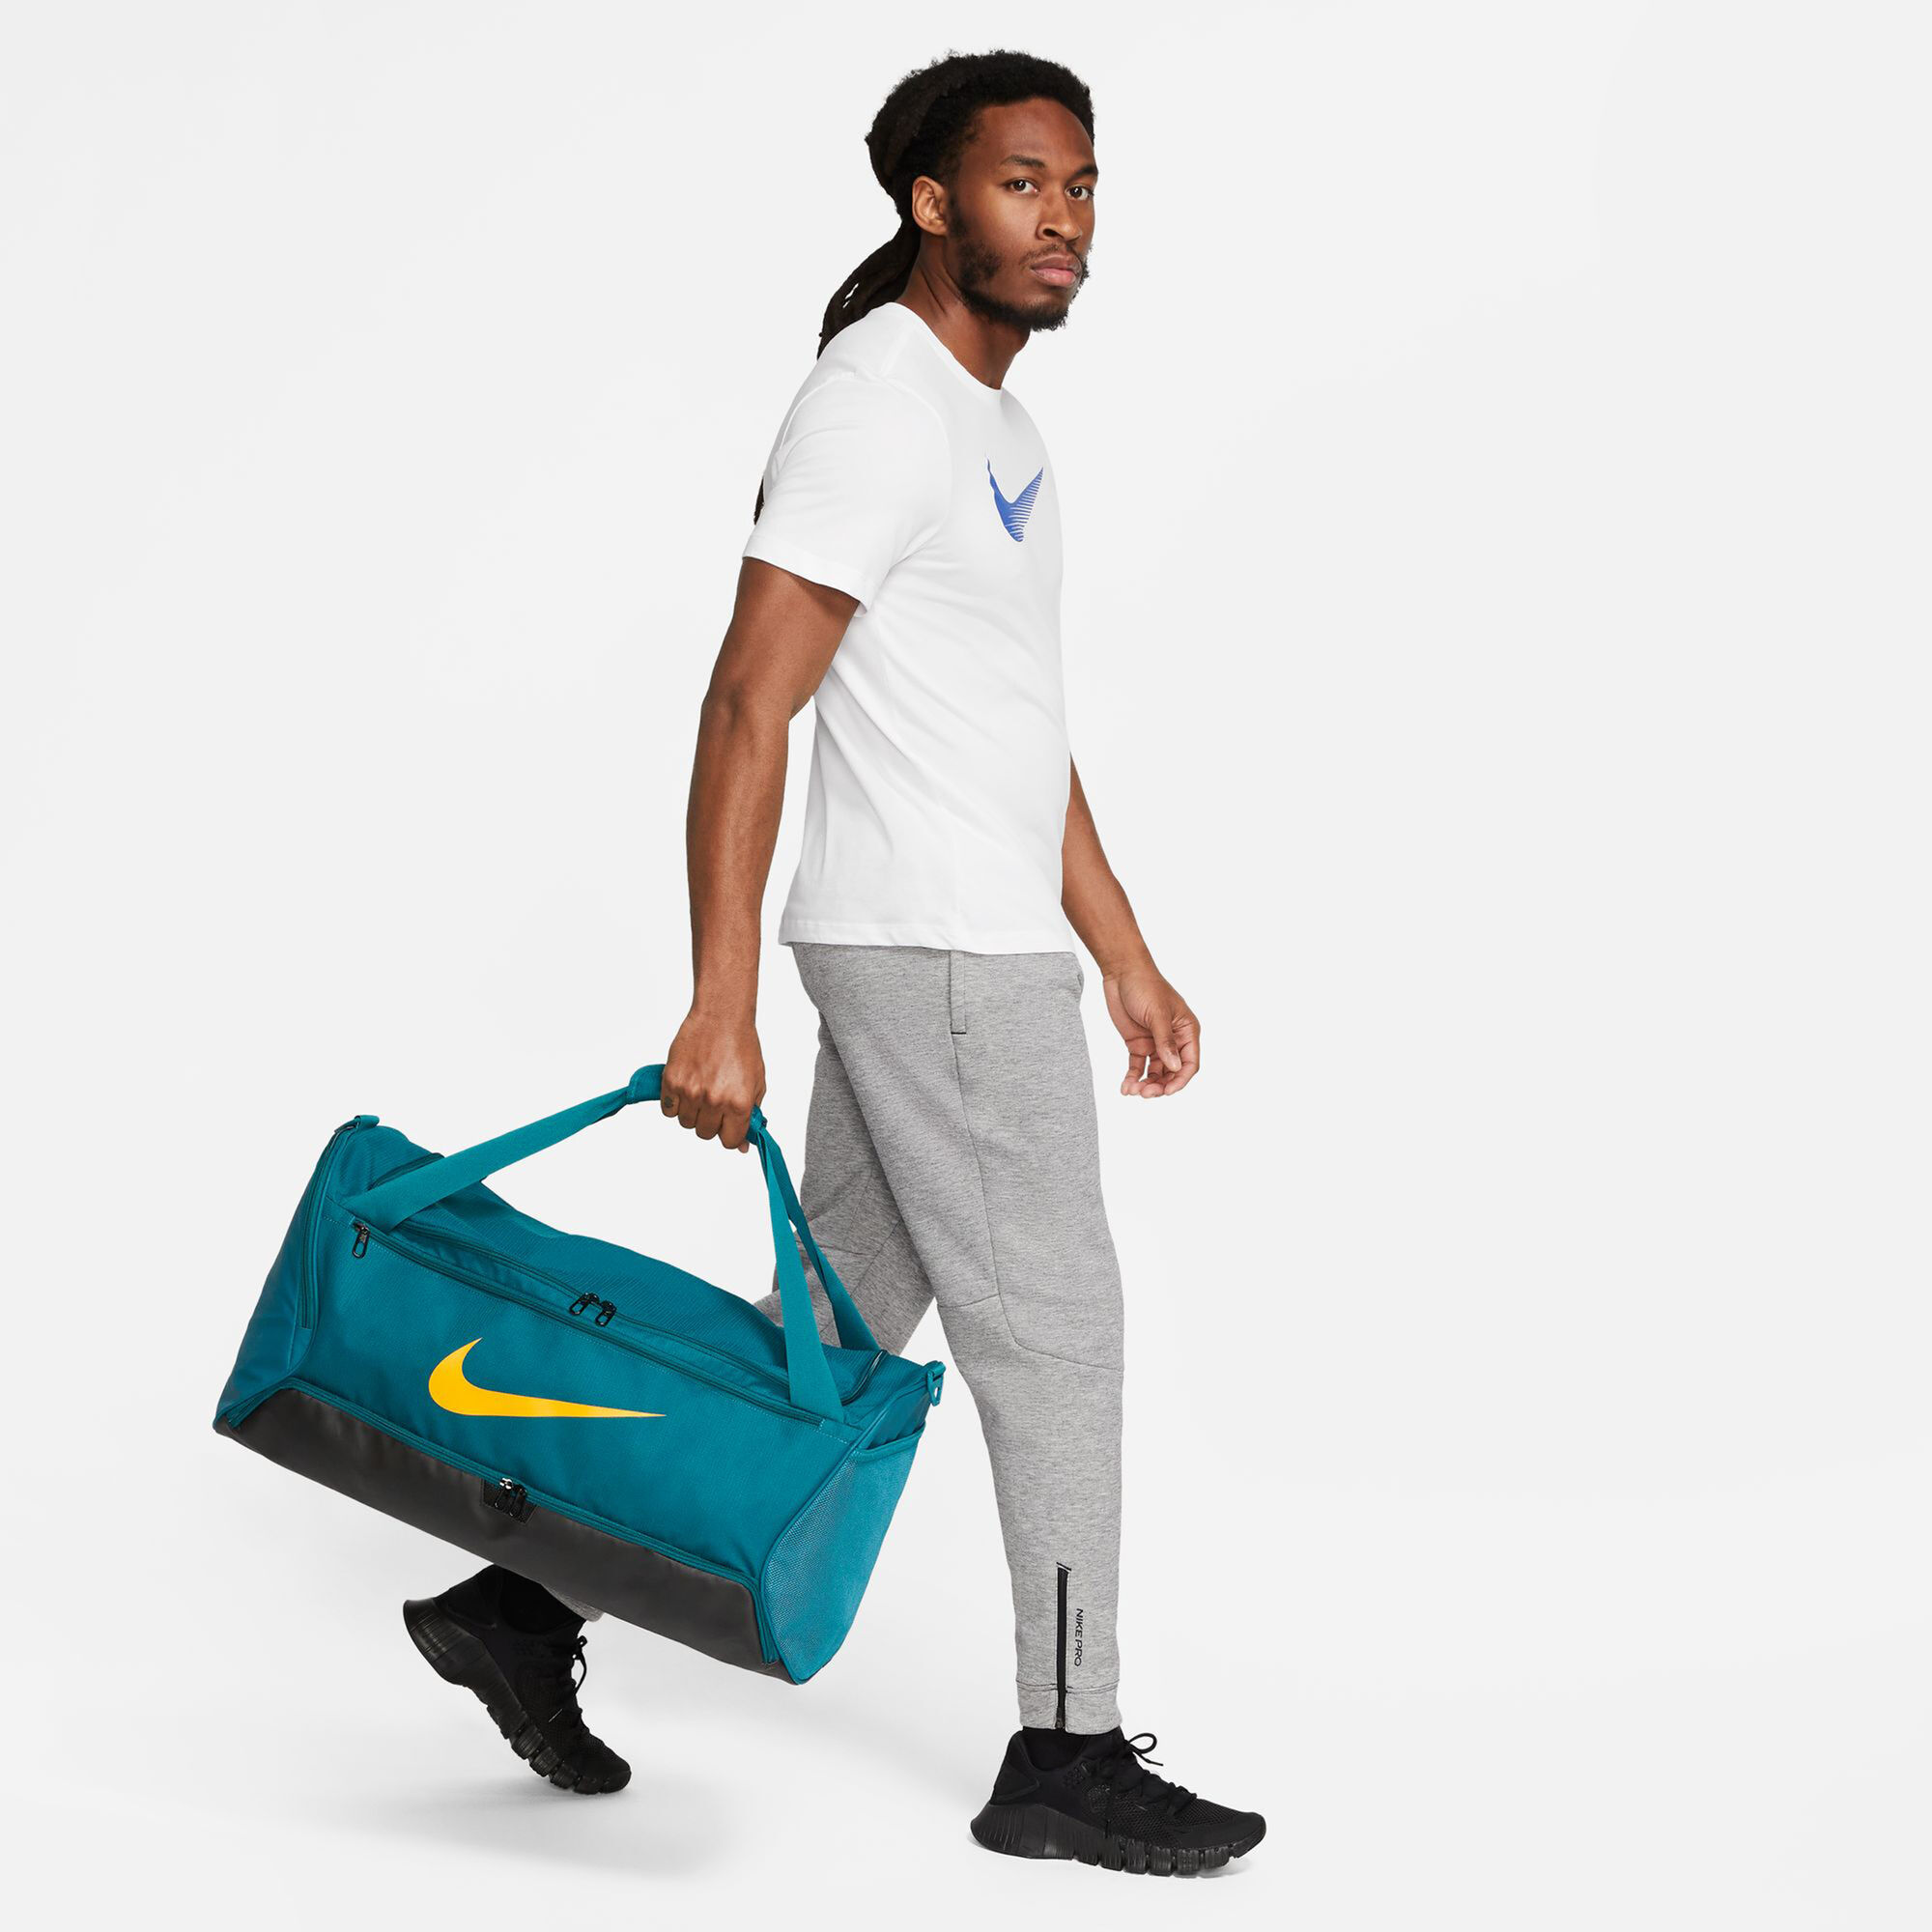 Buy Nike Brasilia 9.5 Sports Bag Green online